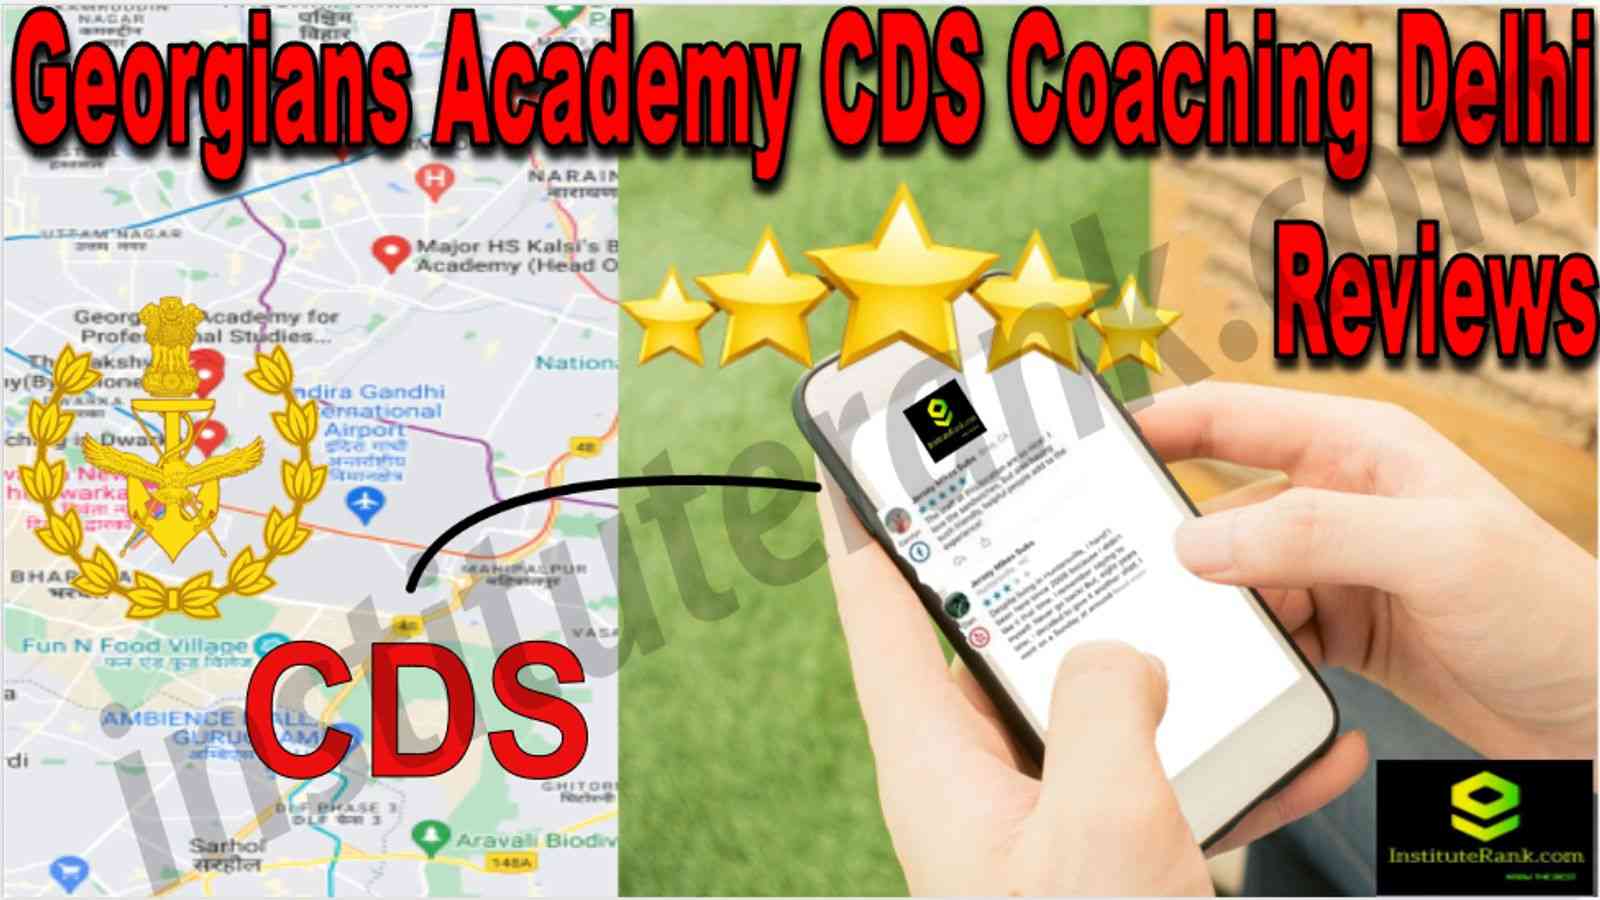 Georgians Academy CDS Coaching Delhi Reviews